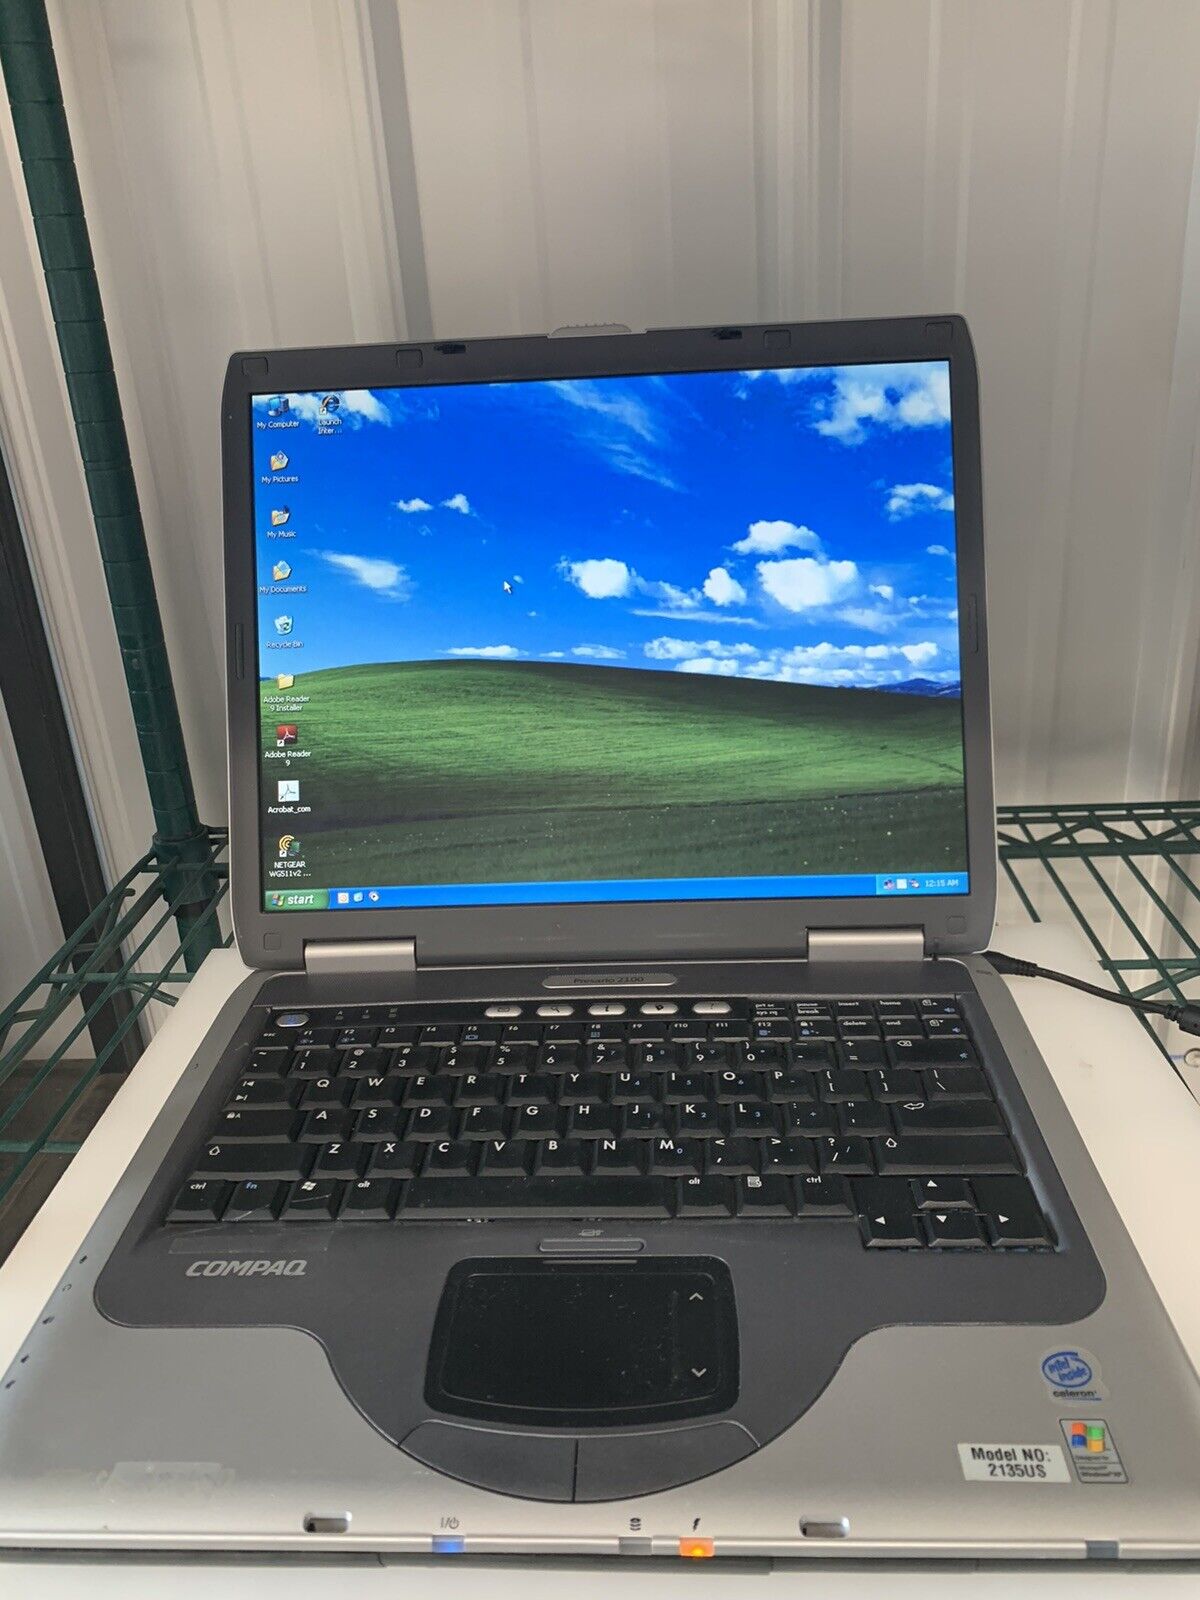 Compaq Presario 2100 Laptop Windows XP 960mb RAM 100gb Hard Drive WORKING READ